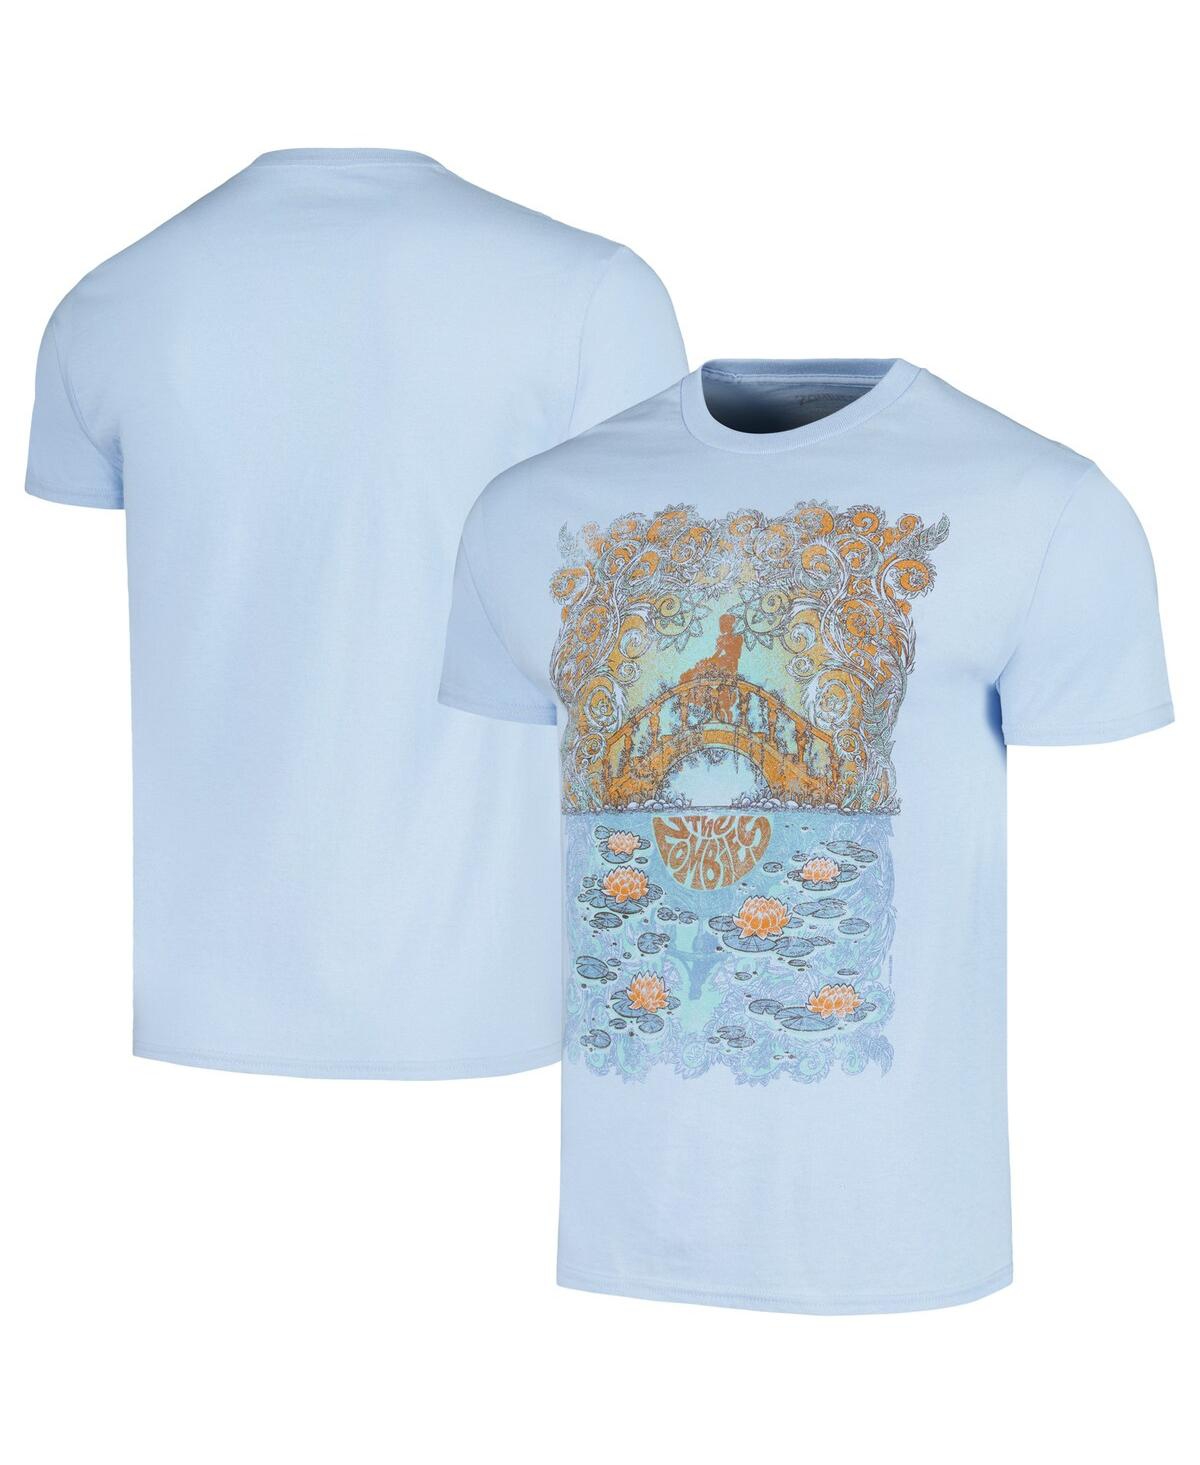 Manhead Merch Men's  Light Blue The Zombies Bridge Distressed Graphic T-shirt